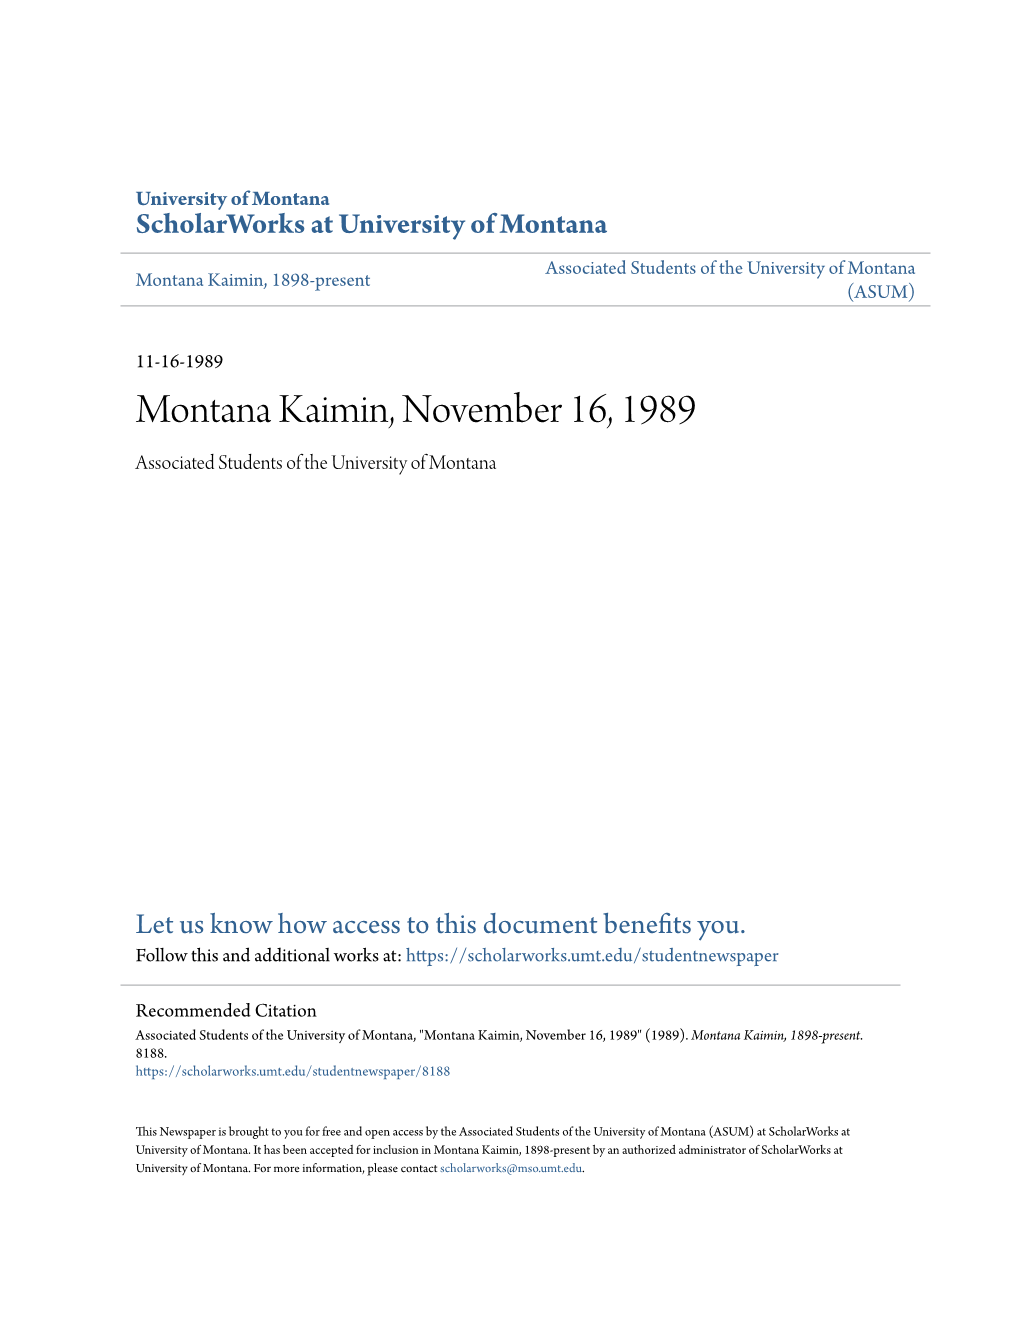 Montana Kaimin, November 16, 1989 Associated Students of the University of Montana